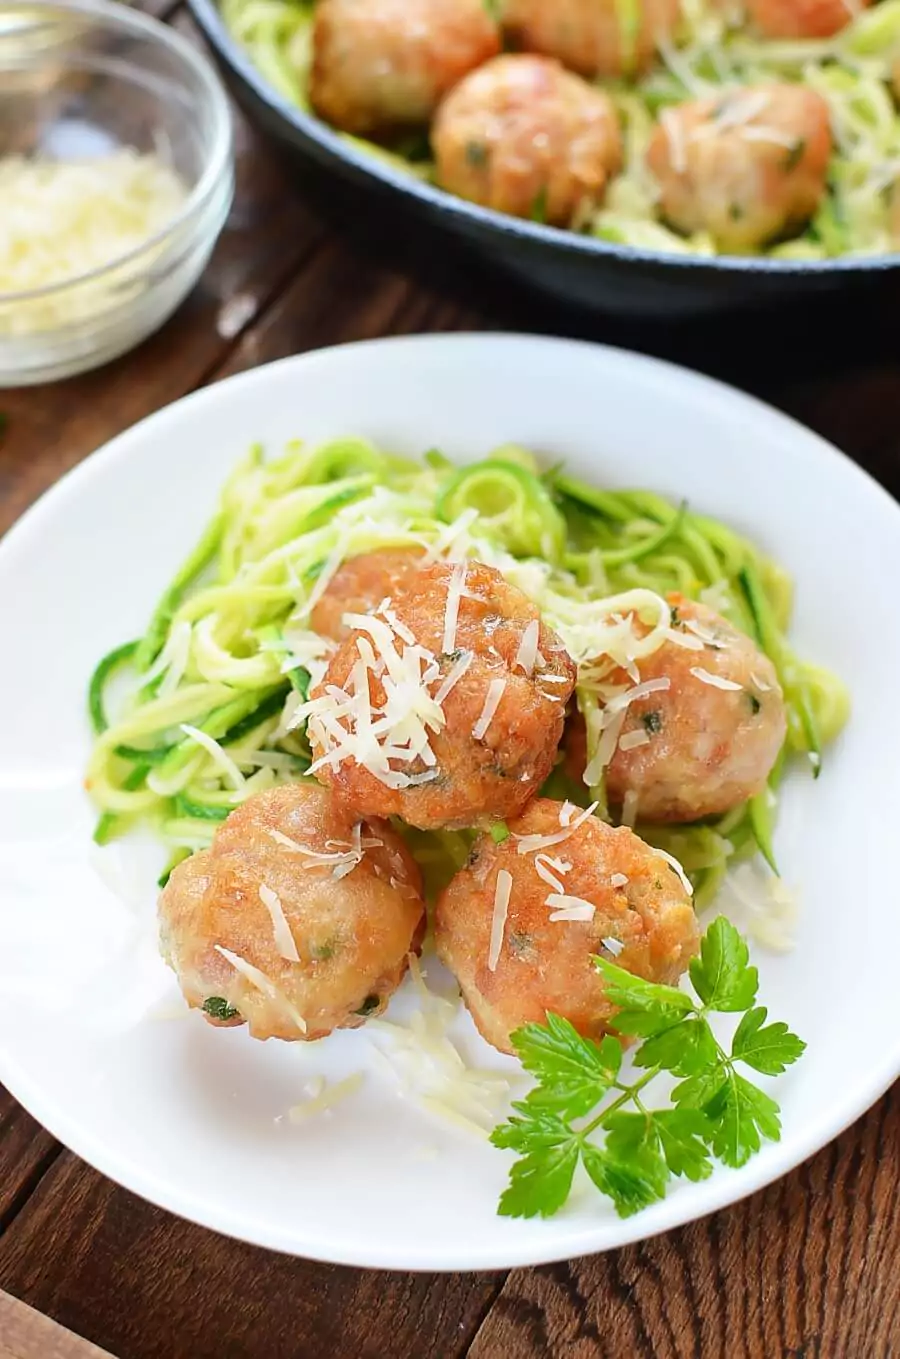 https://cook.me/wp-content/uploads/2020/02/Garlic-Butter-Meatballs-Recipe-How-To-Make-Garlic-Butter-Meatballs-Delicious-Garlic-Butter-Meatballs-15.jpg